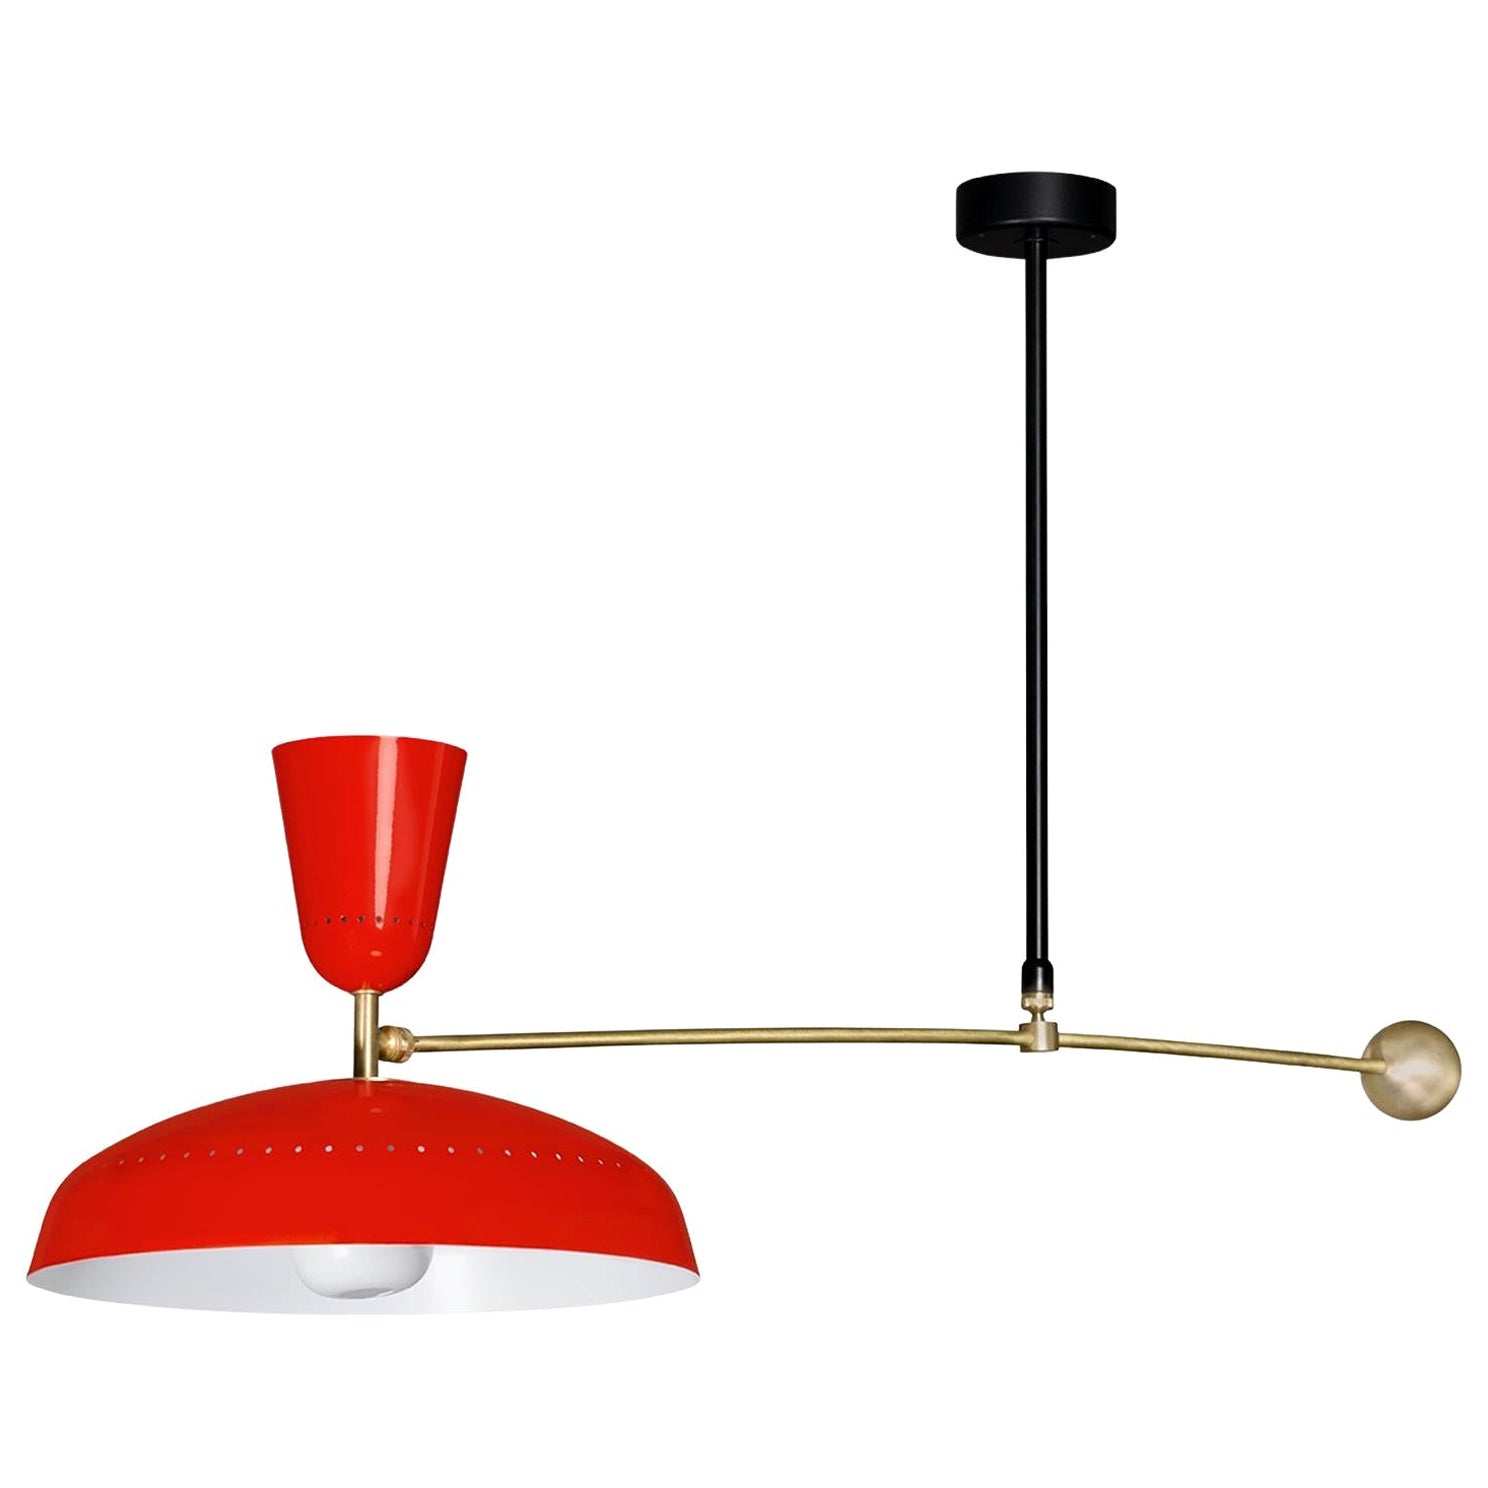 Large Pierre Guariche 'G1' Suspension Lamp for Sammode Studio in Red